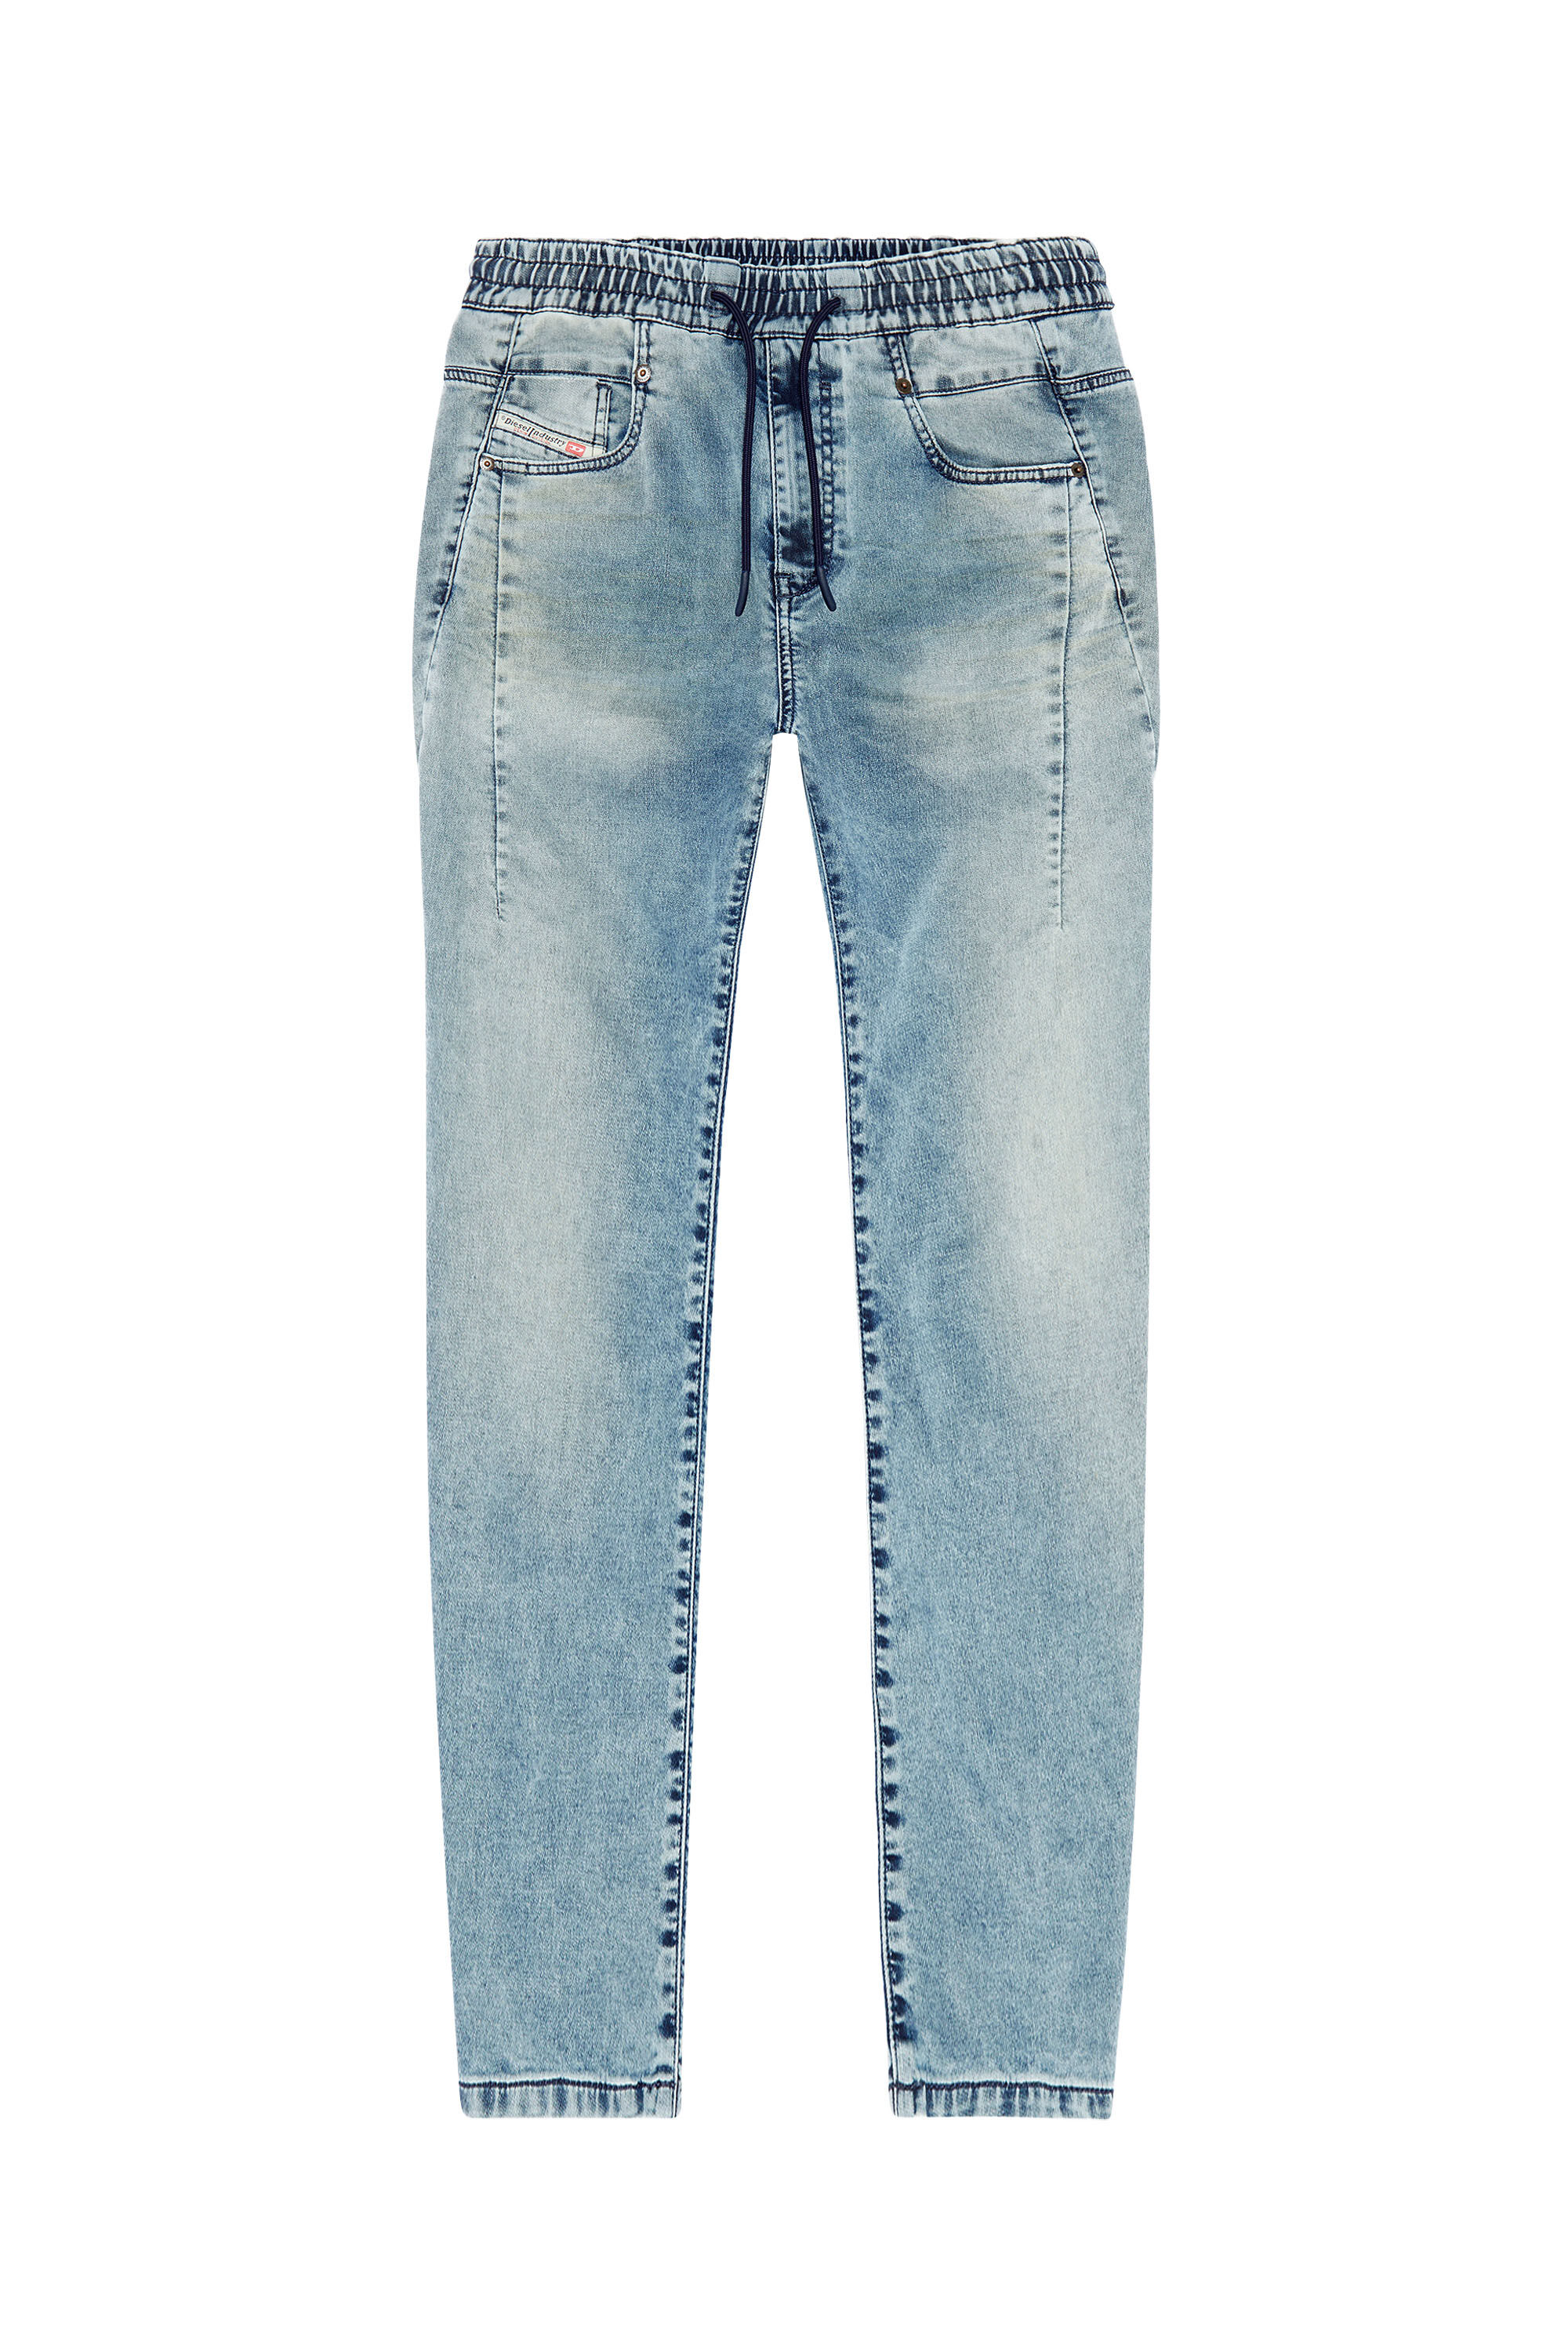 Diesel Fayza jogg jeans 23 ブルー ドイツで購入 割引価格 - パンツ